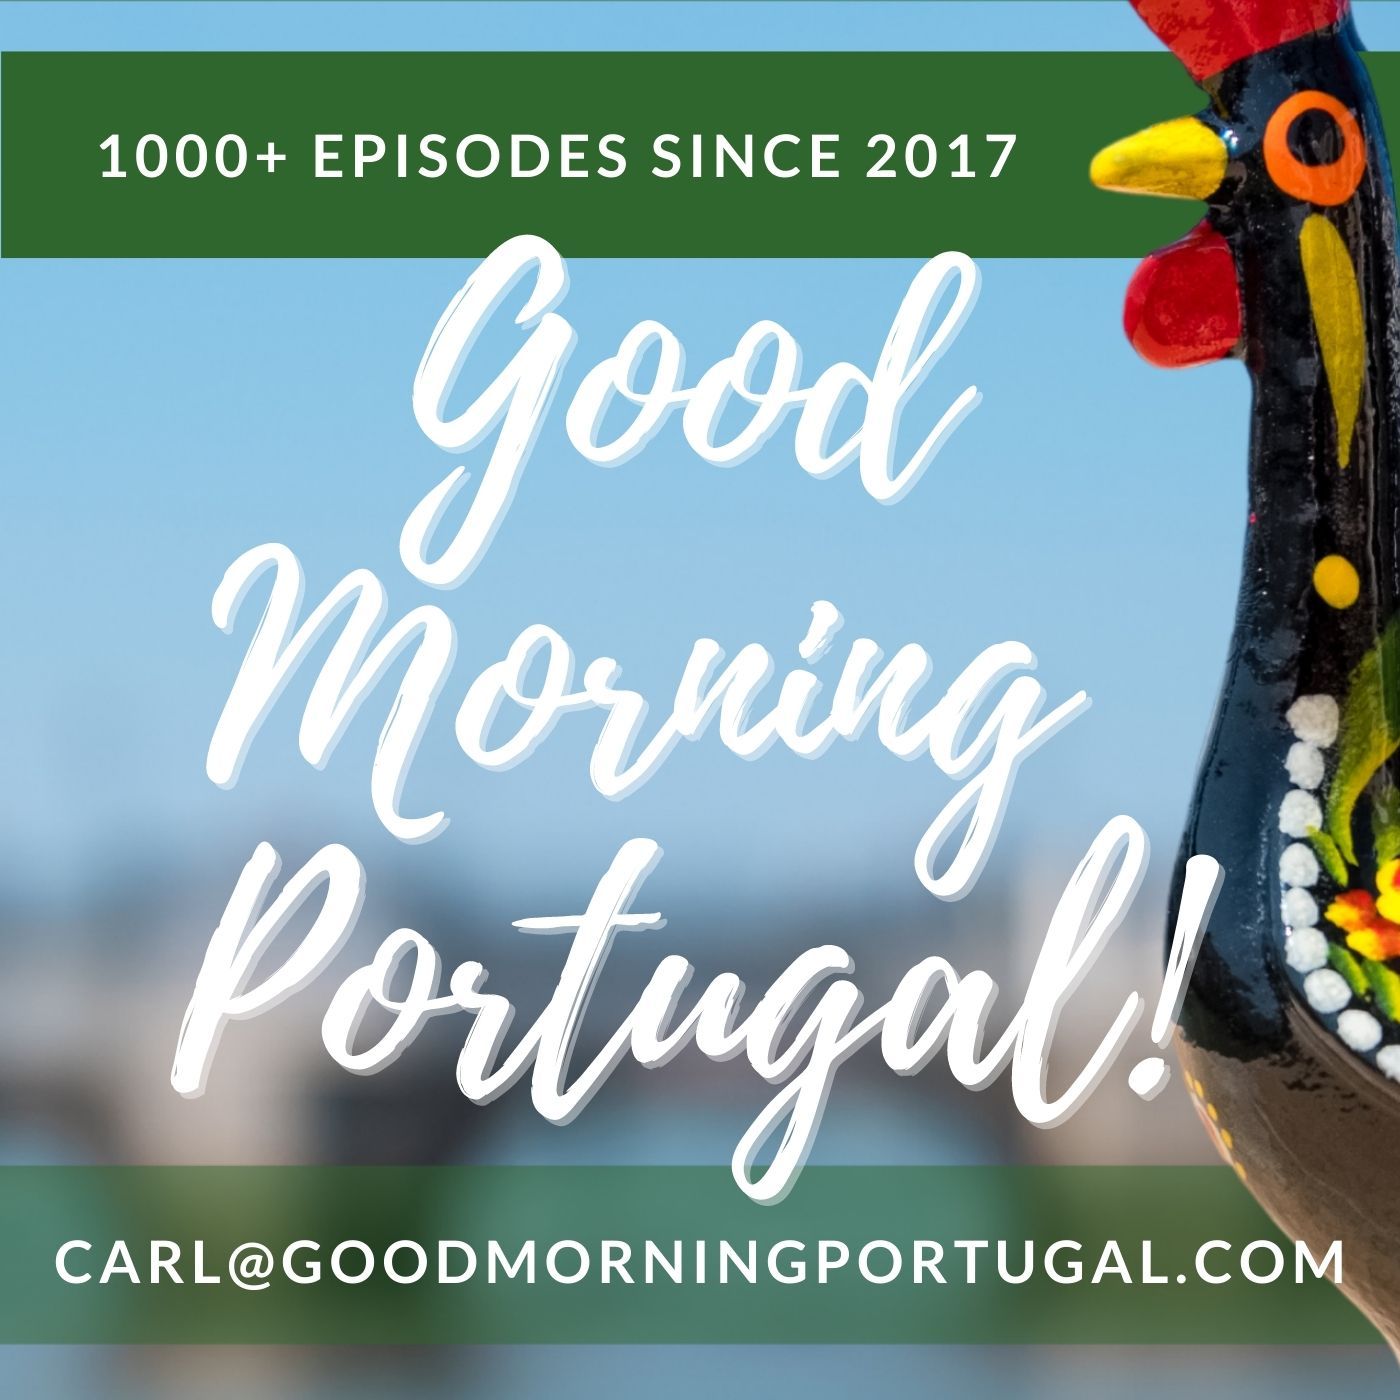 Good Morning Portugal!